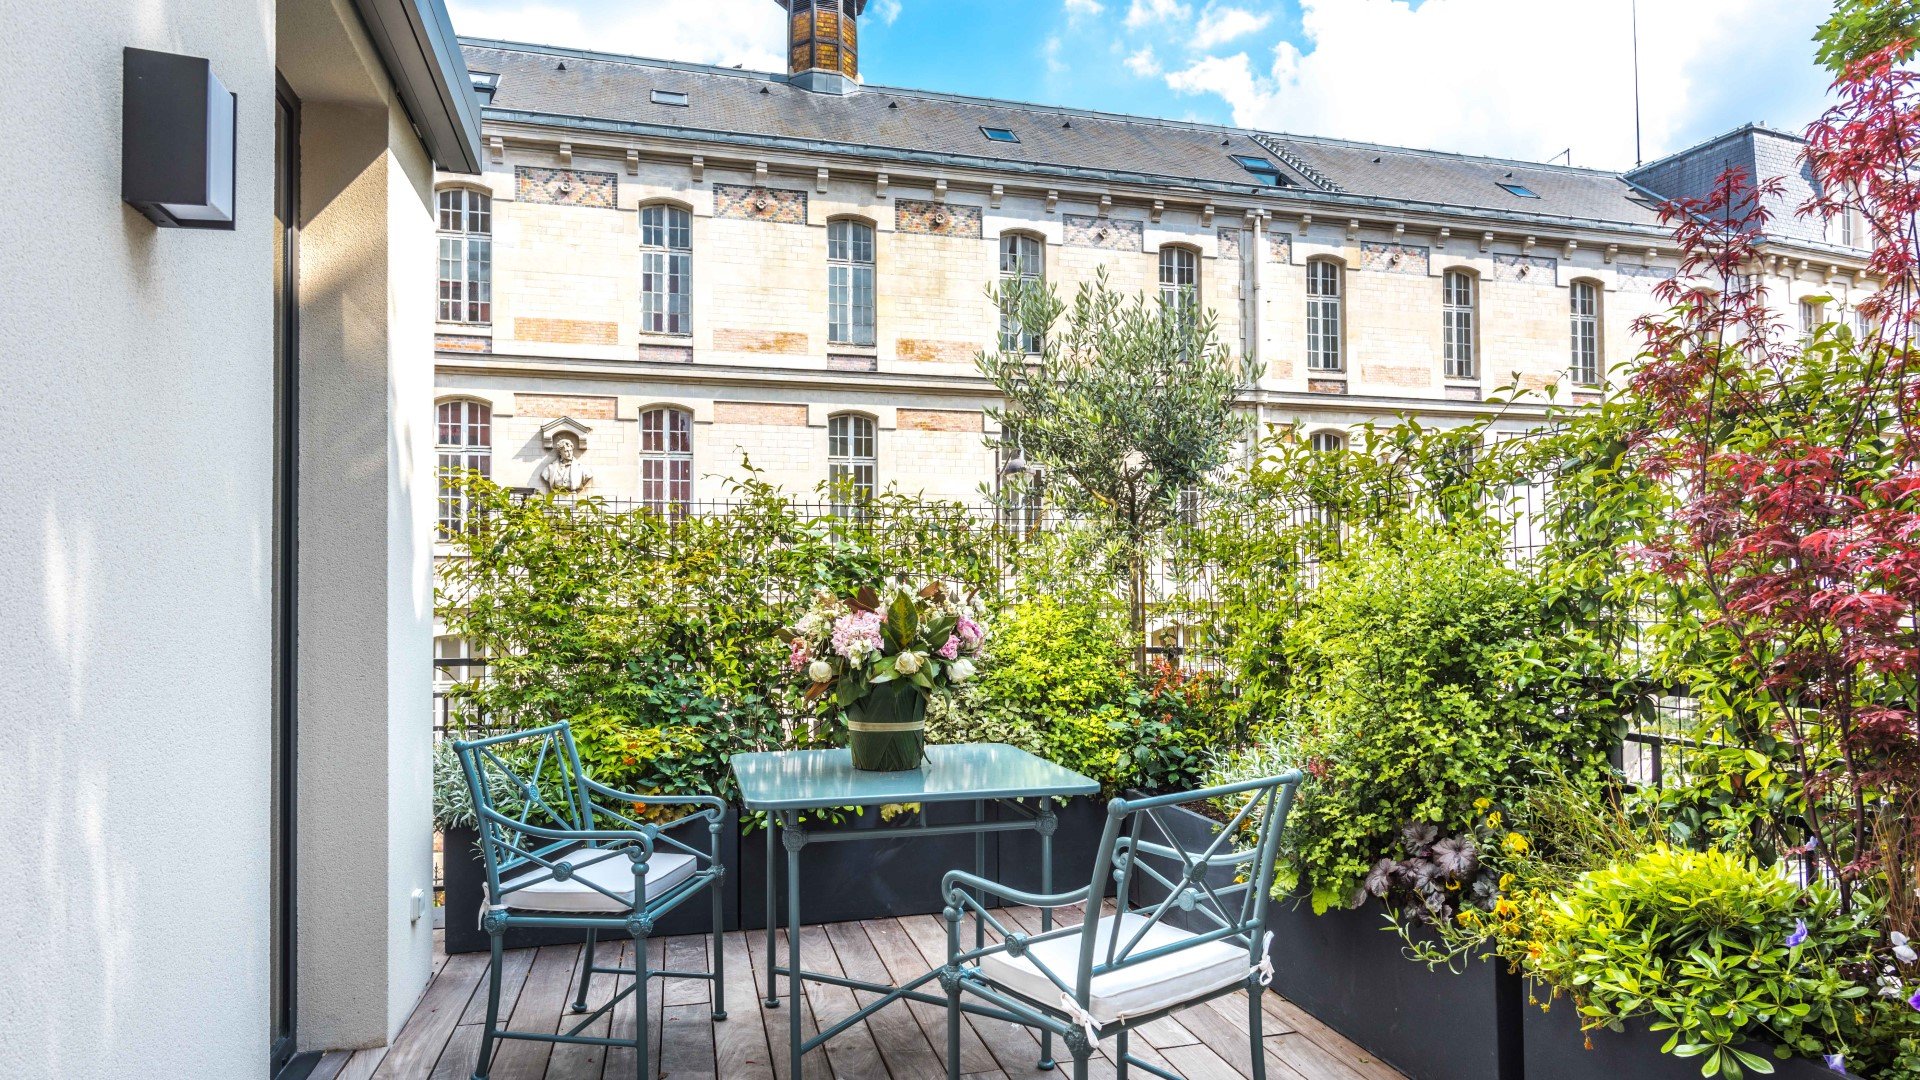 70m2 rooftop at the luxury Paris home Homanie Mandel